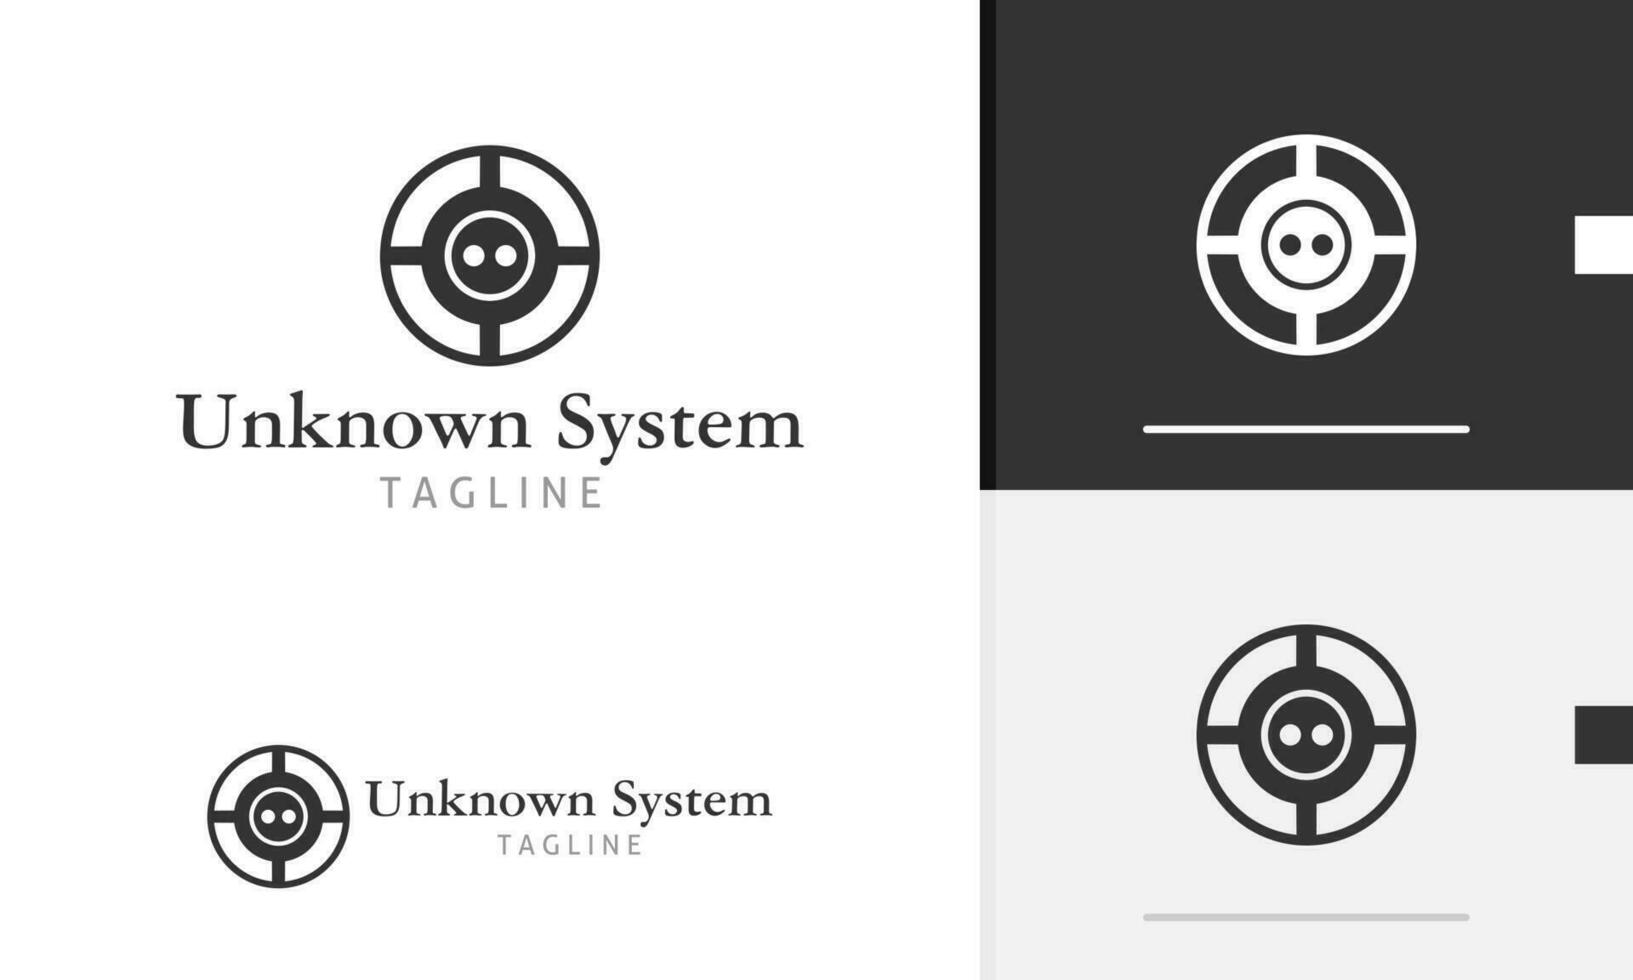 Logo design icon abstract geometric circle black device system modern futuristic tech robot spy mask vector